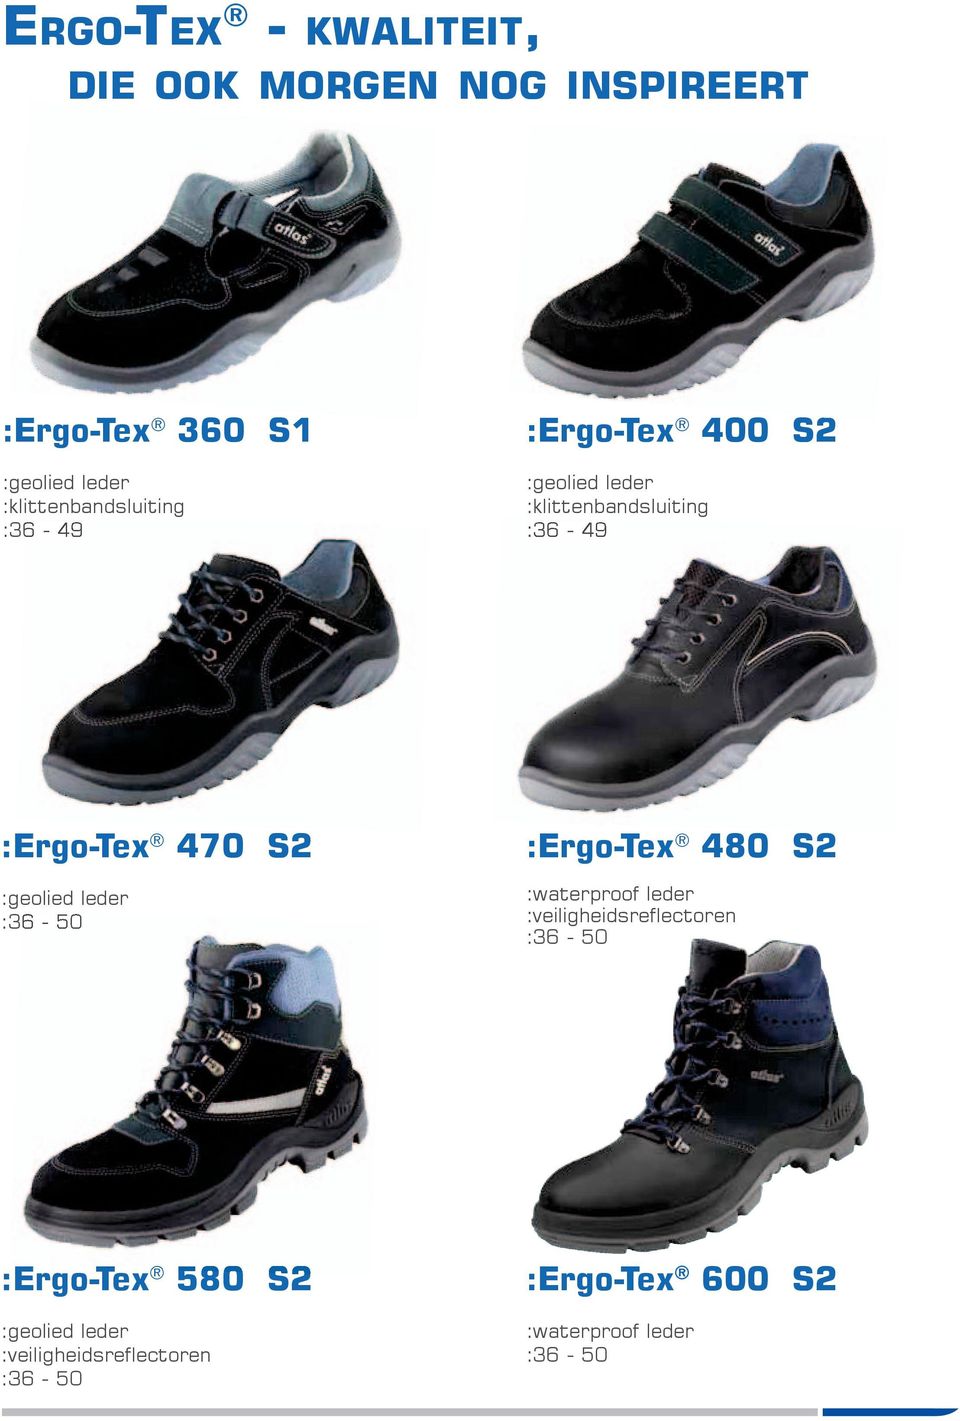 :Ergo-Tex 470 S2 :geolied leder :36-50 :Ergo-Tex 480 S2 :veiligheidsreflectoren